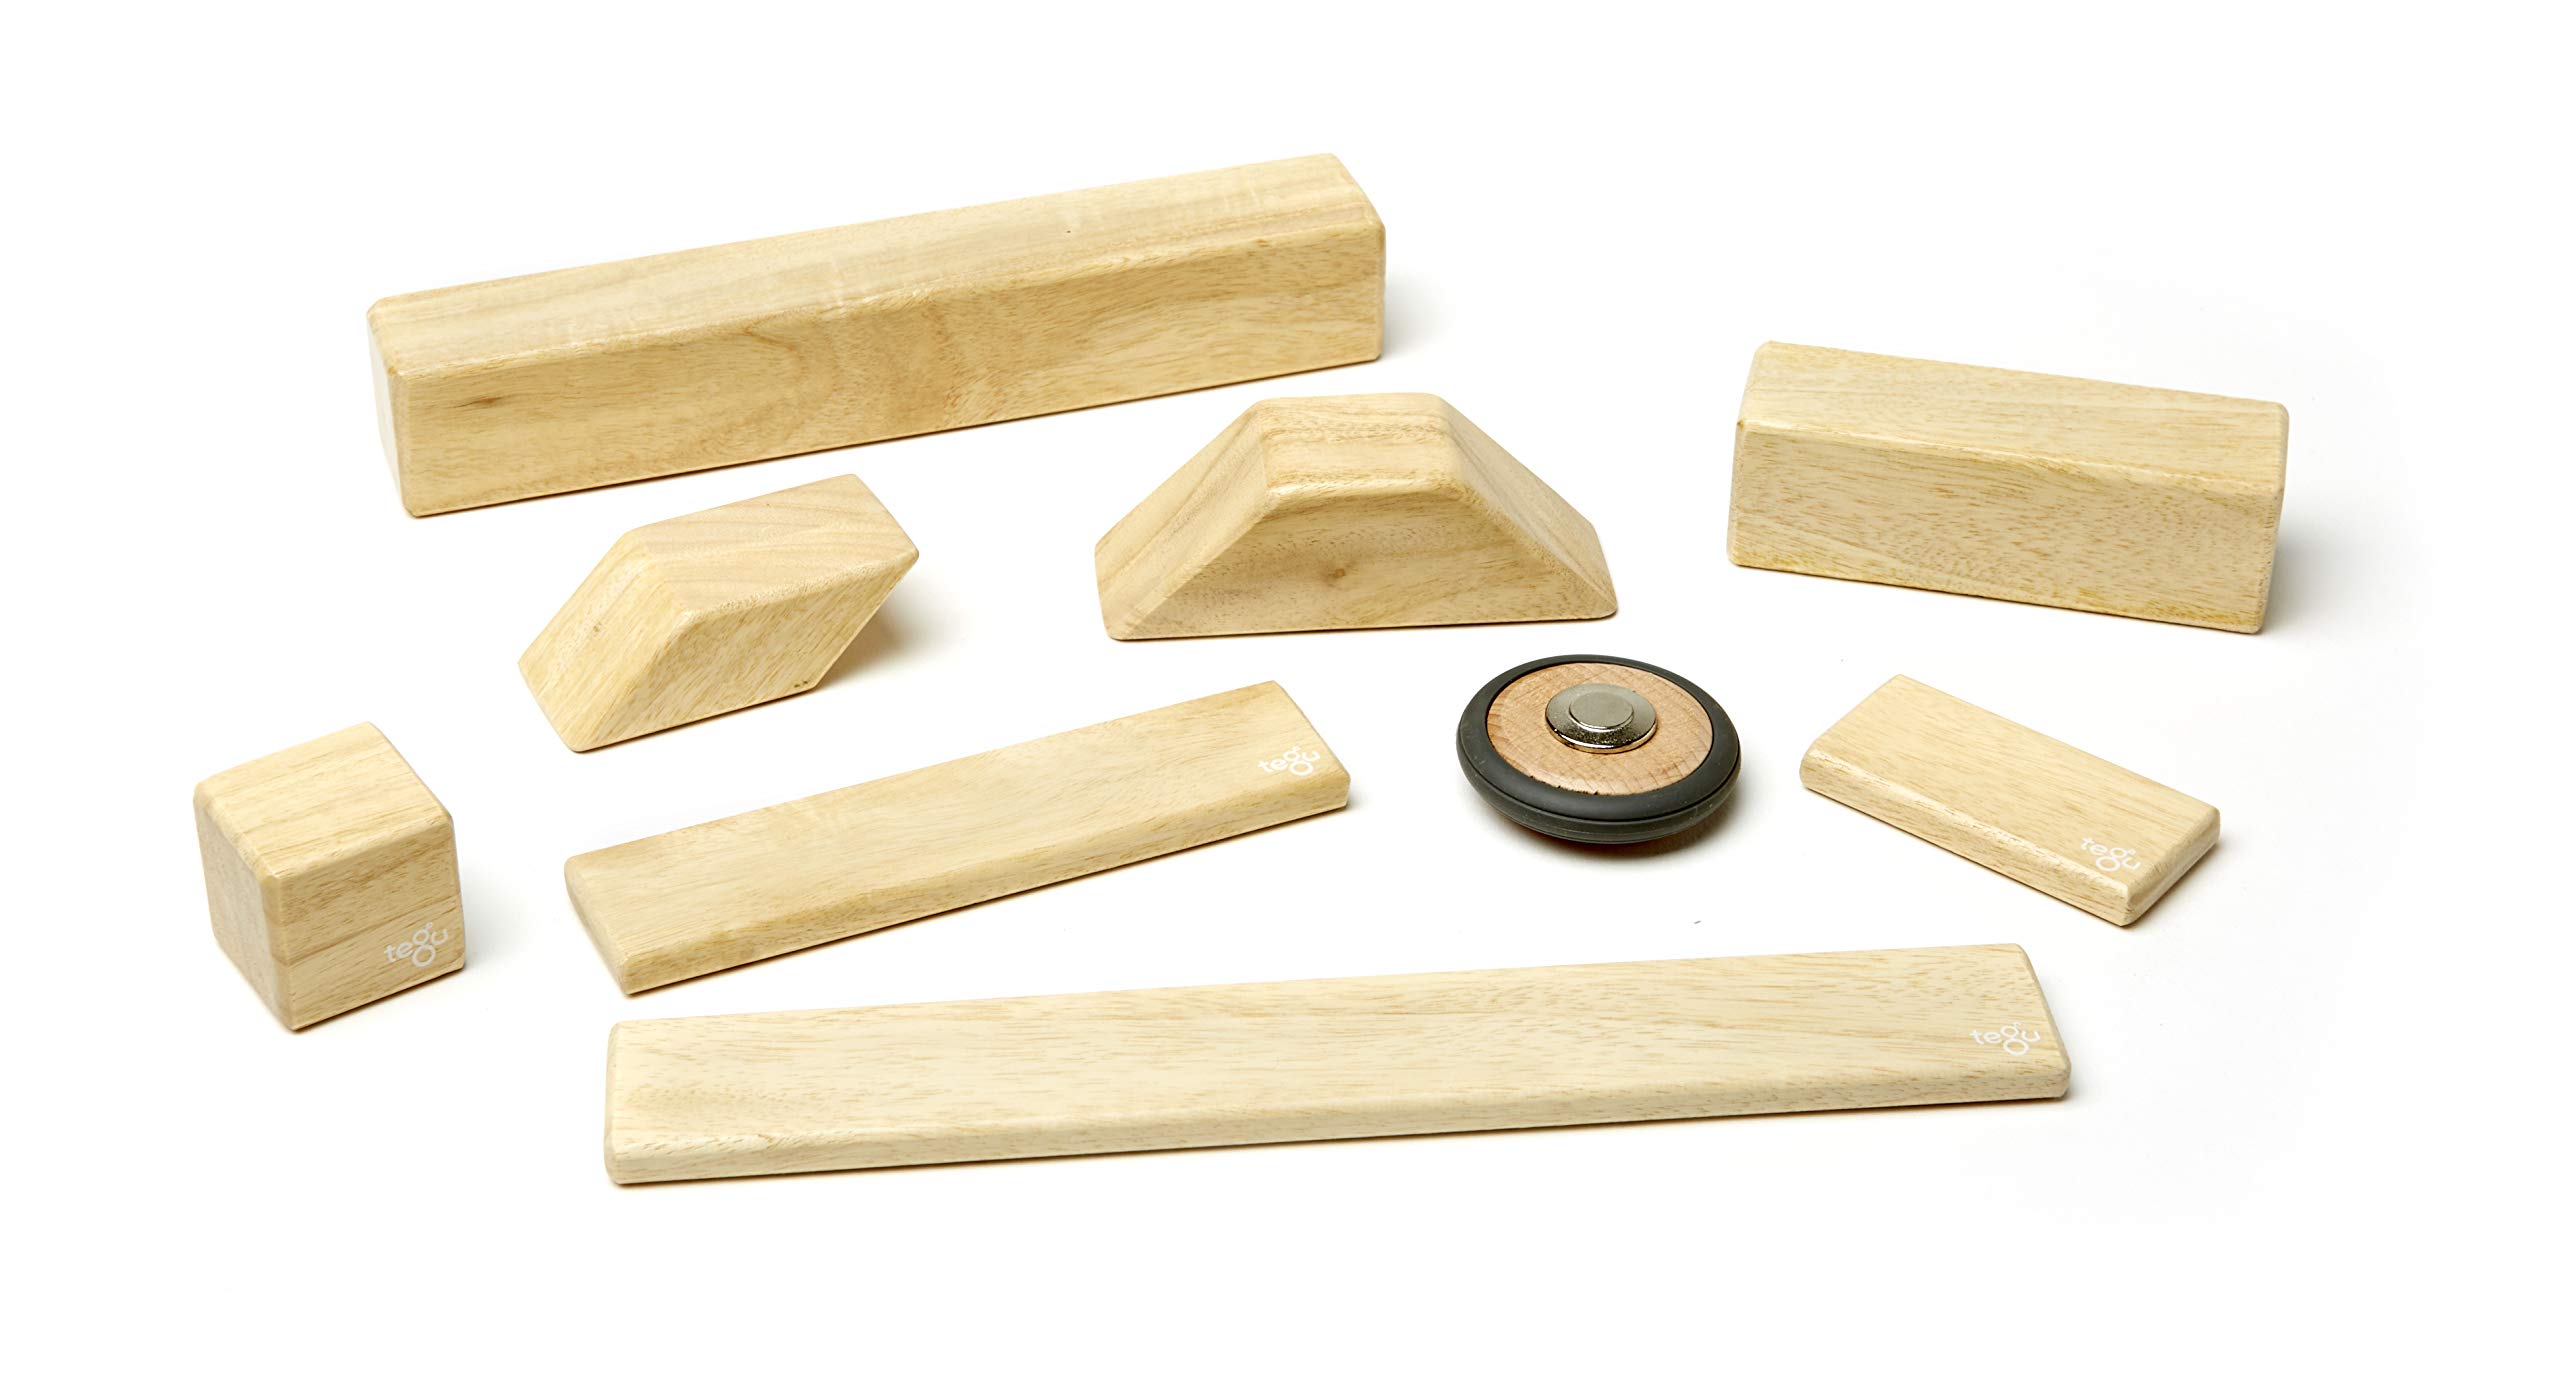 42 Piece Tegu Magnetic Wooden Block Set, Natural